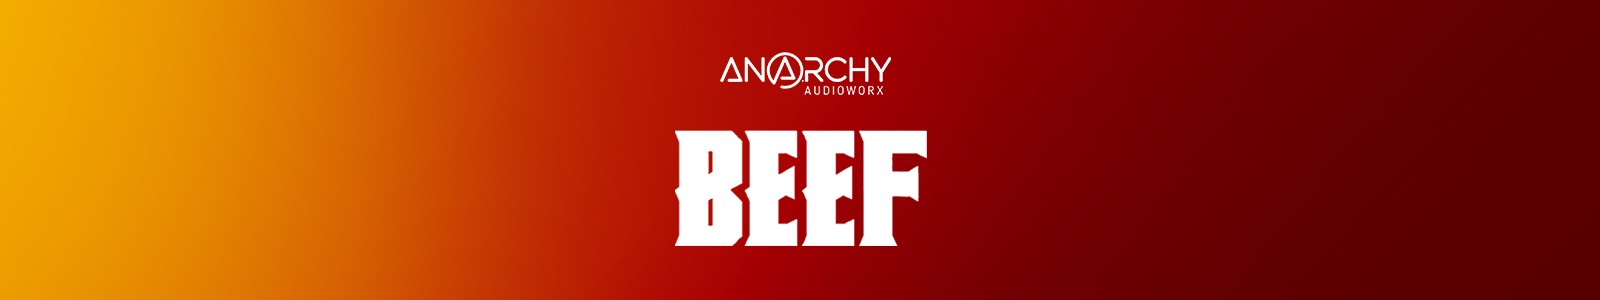 Anarchy Audioworx BEEF